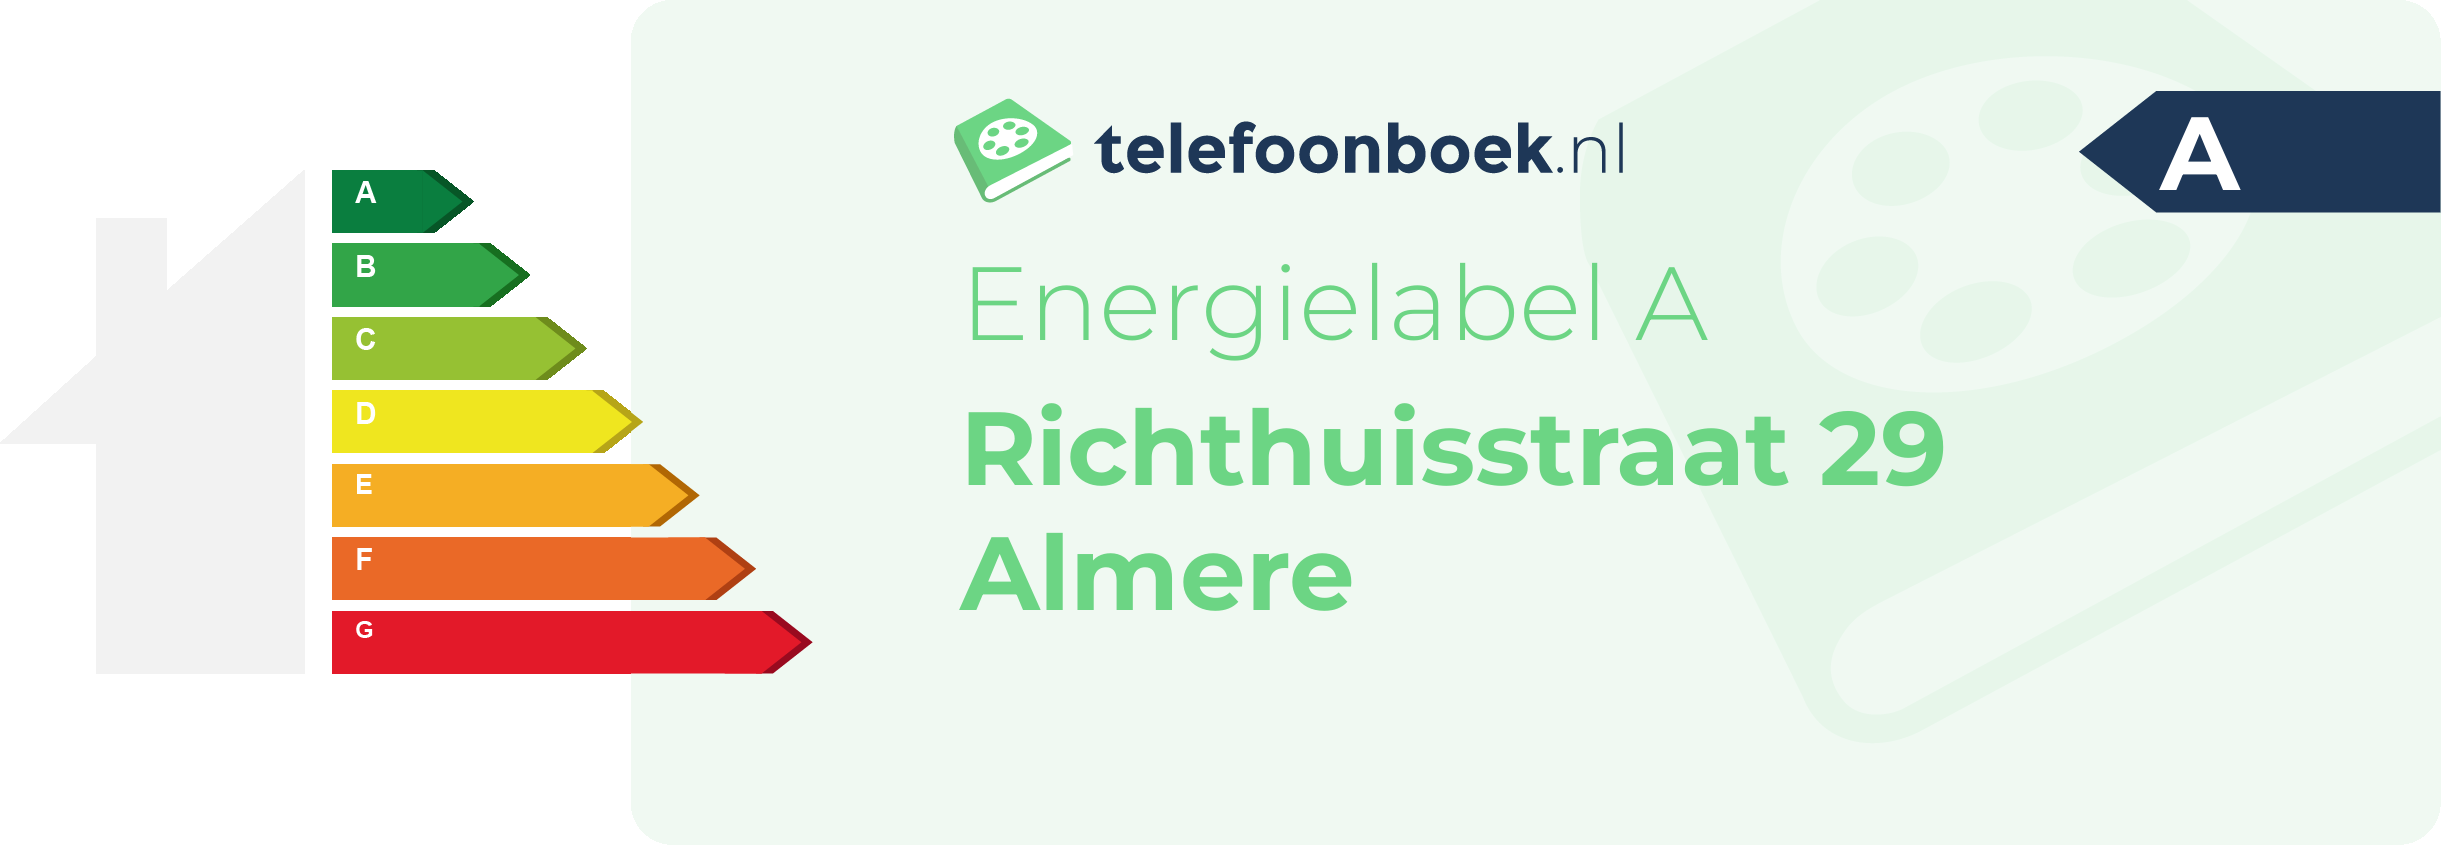 Energielabel Richthuisstraat 29 Almere